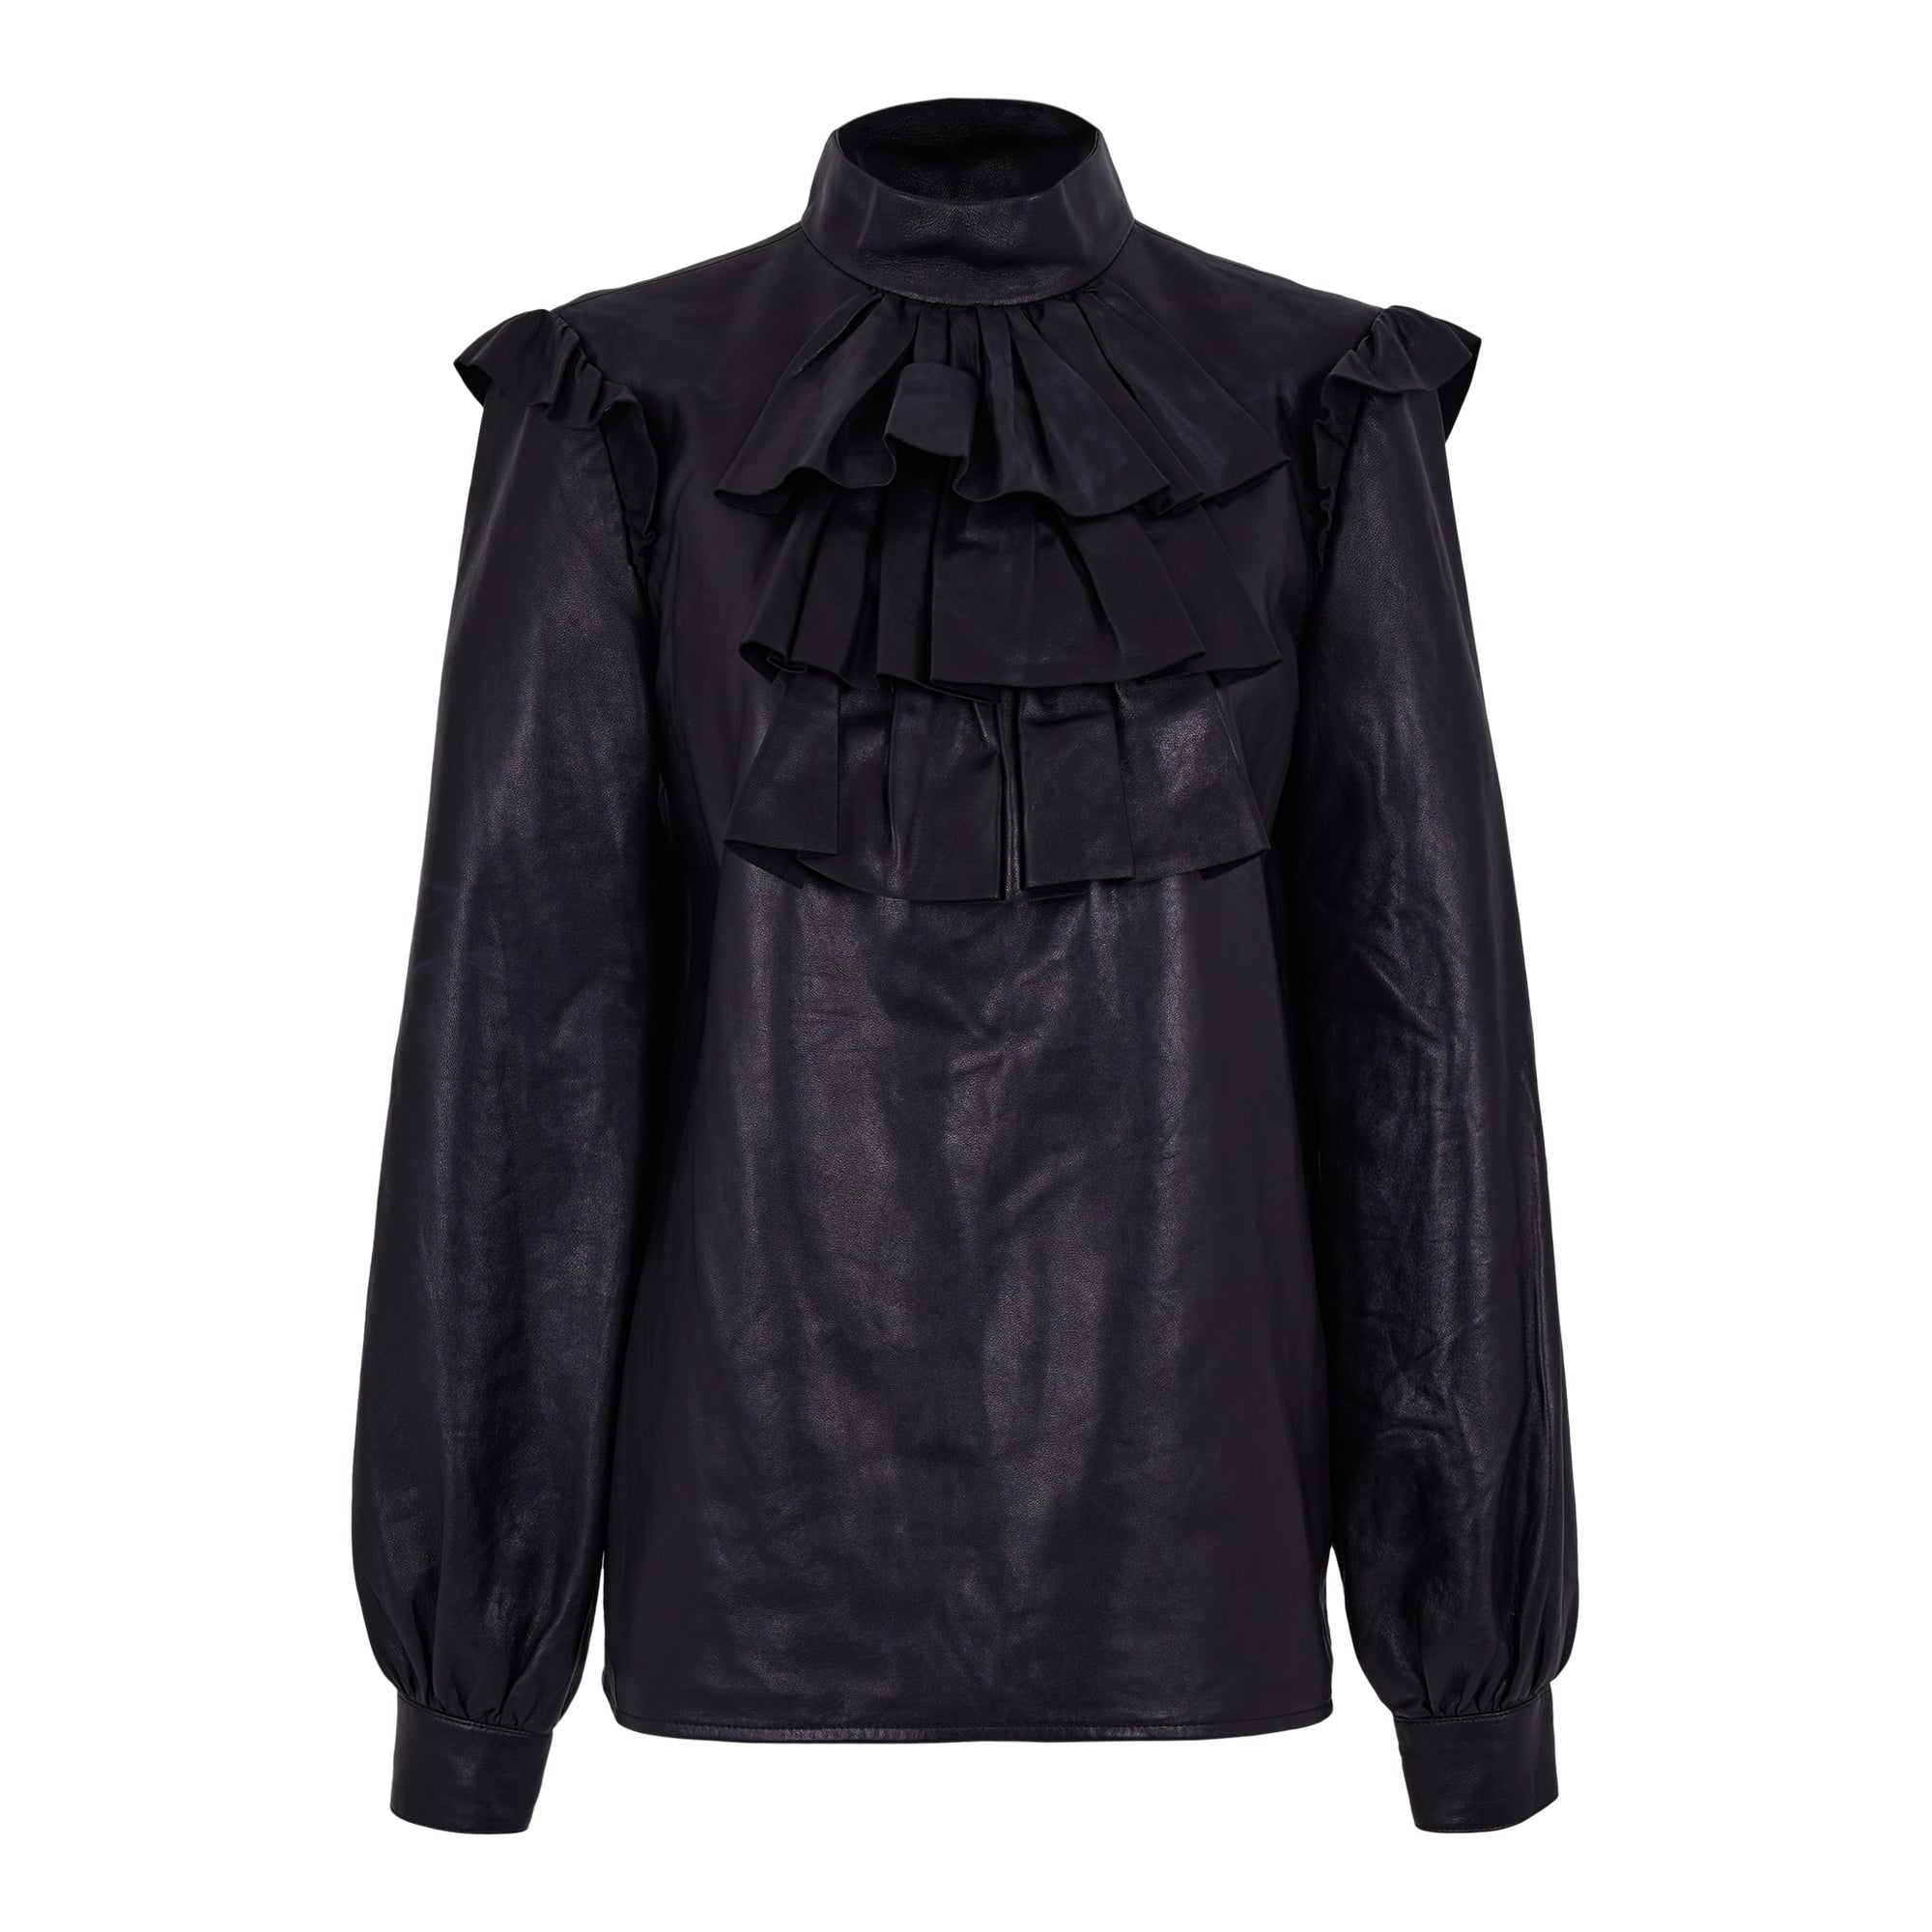 Saint Laurent Black Leather Ruffled Blouse